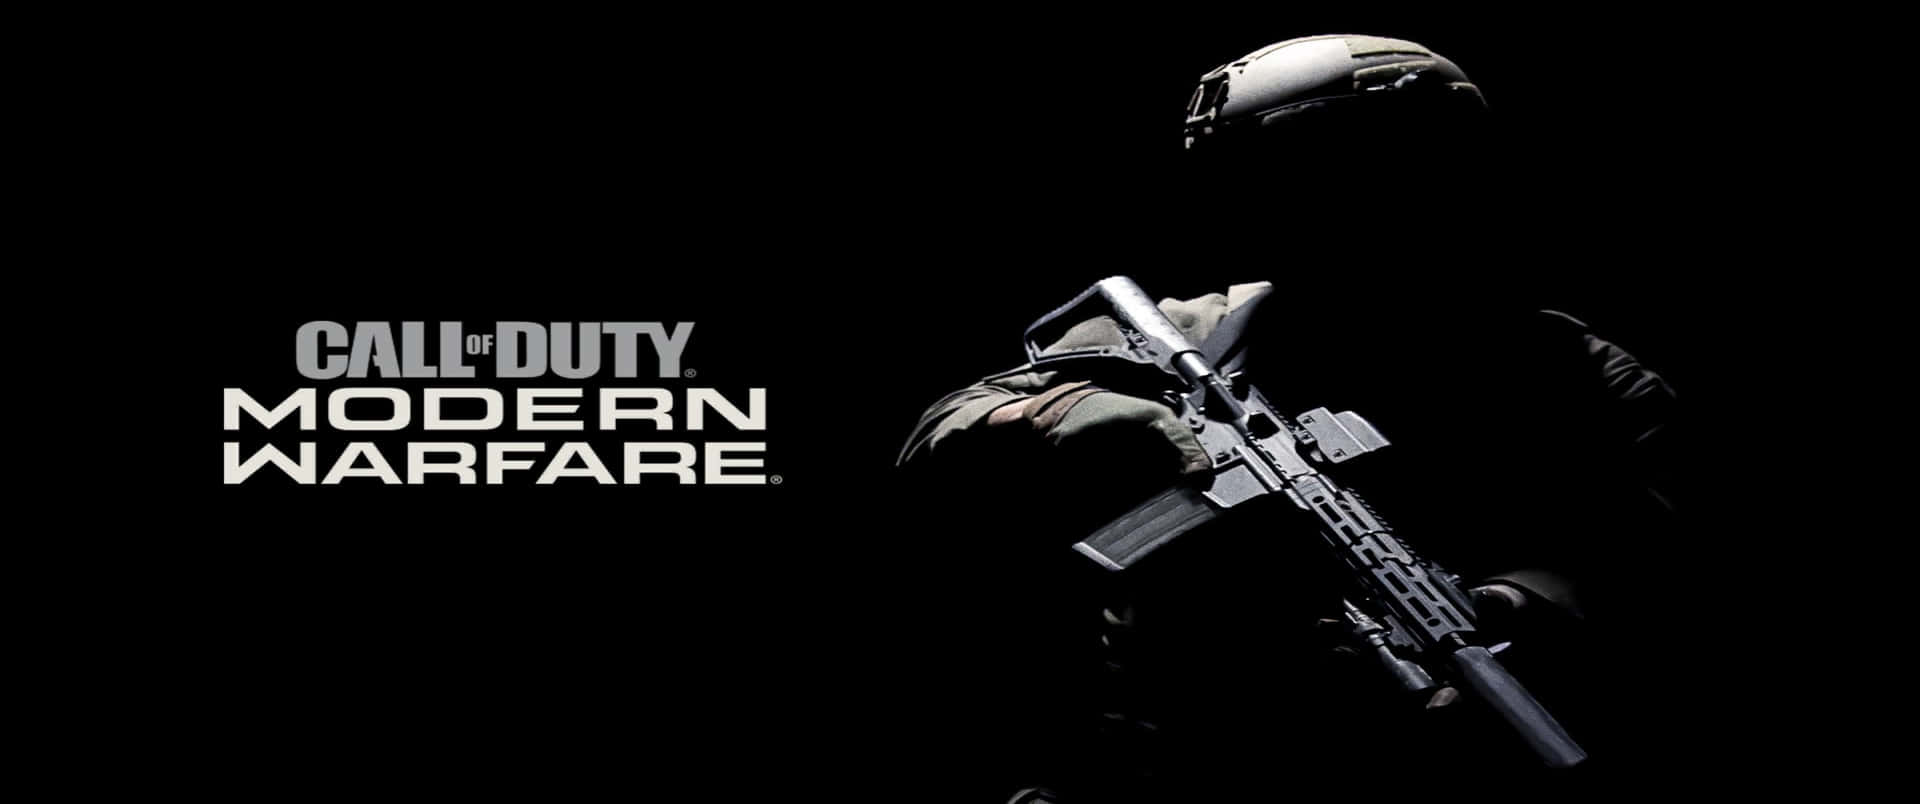 Silhuettmed Titel 3440x1440p Call Of Duty Modern Warfare Bakgrund.